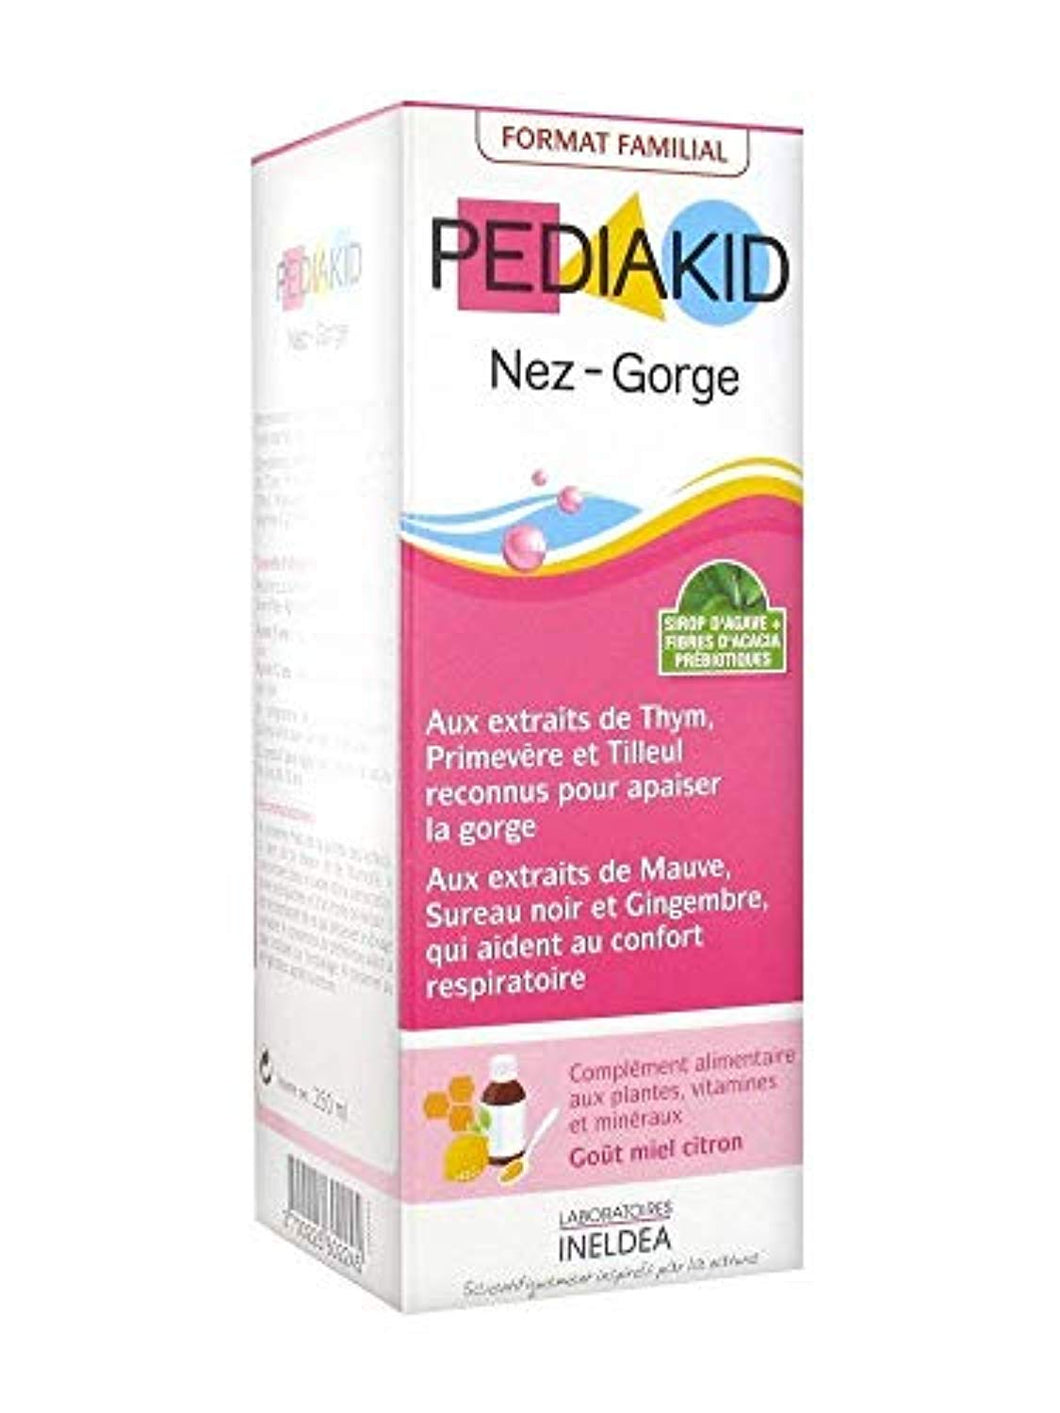 Pediakid Nez Gorge Format Familial 250 ml